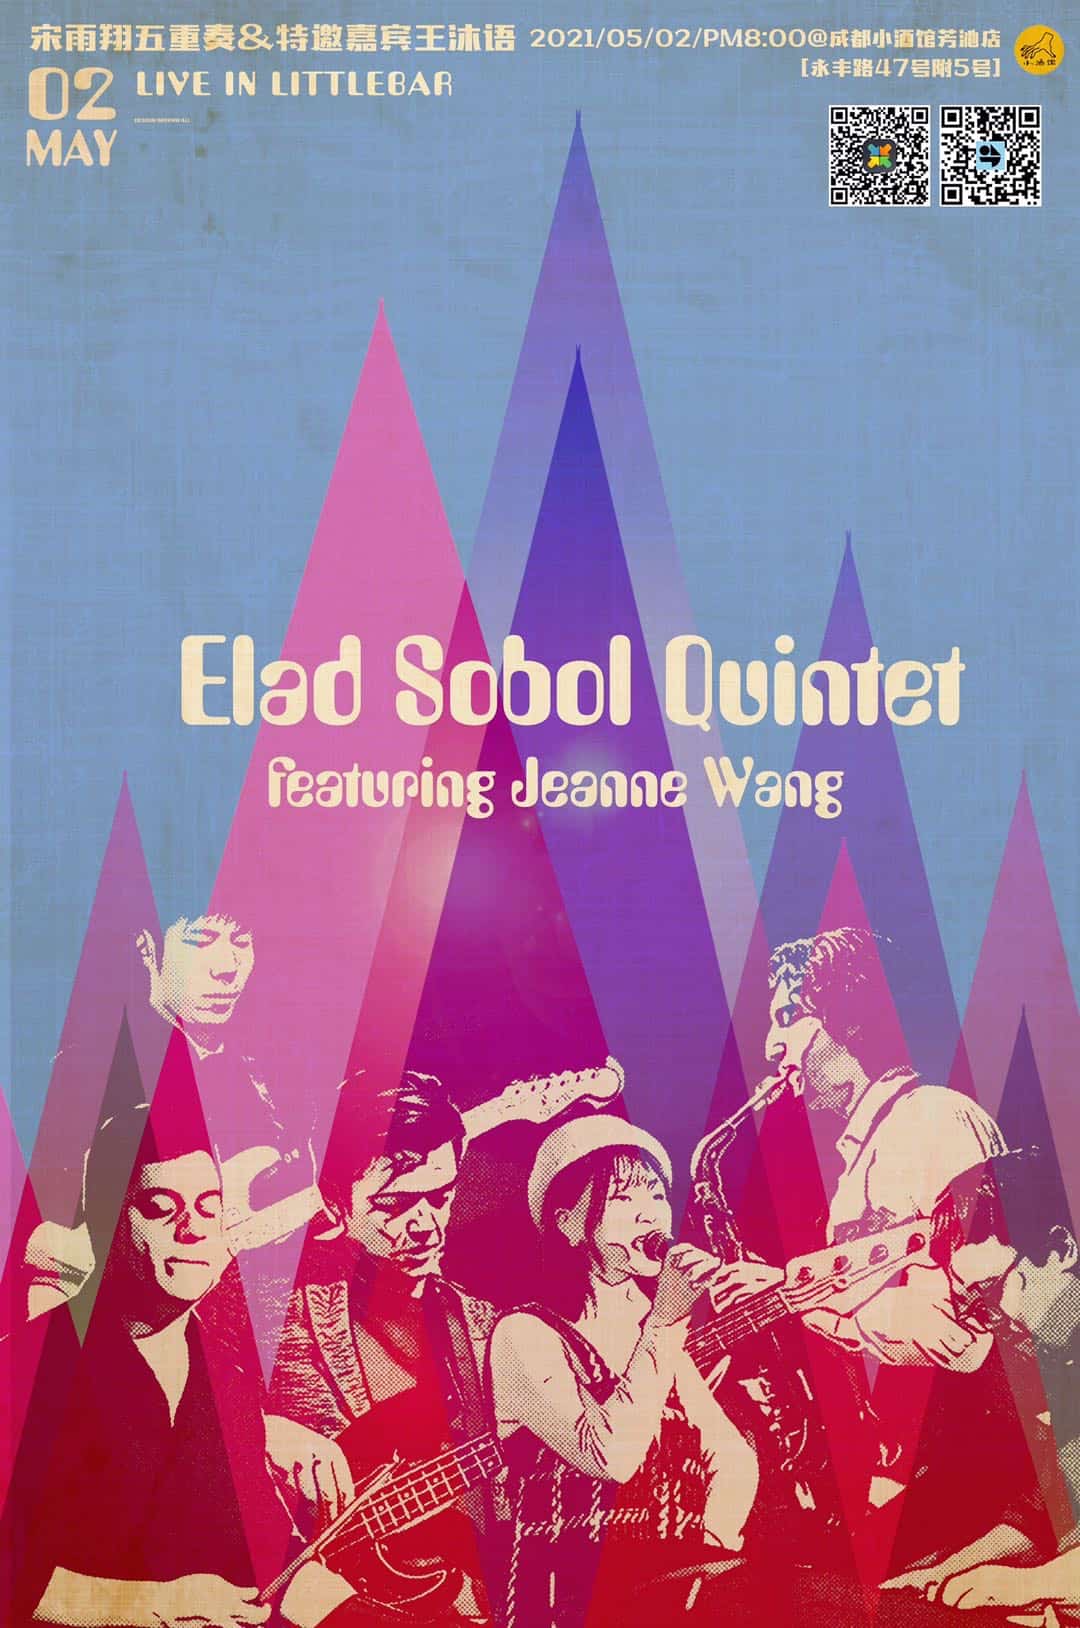 Elad Sobol Jazz Quintet w/ vocalist Jeanne Wang